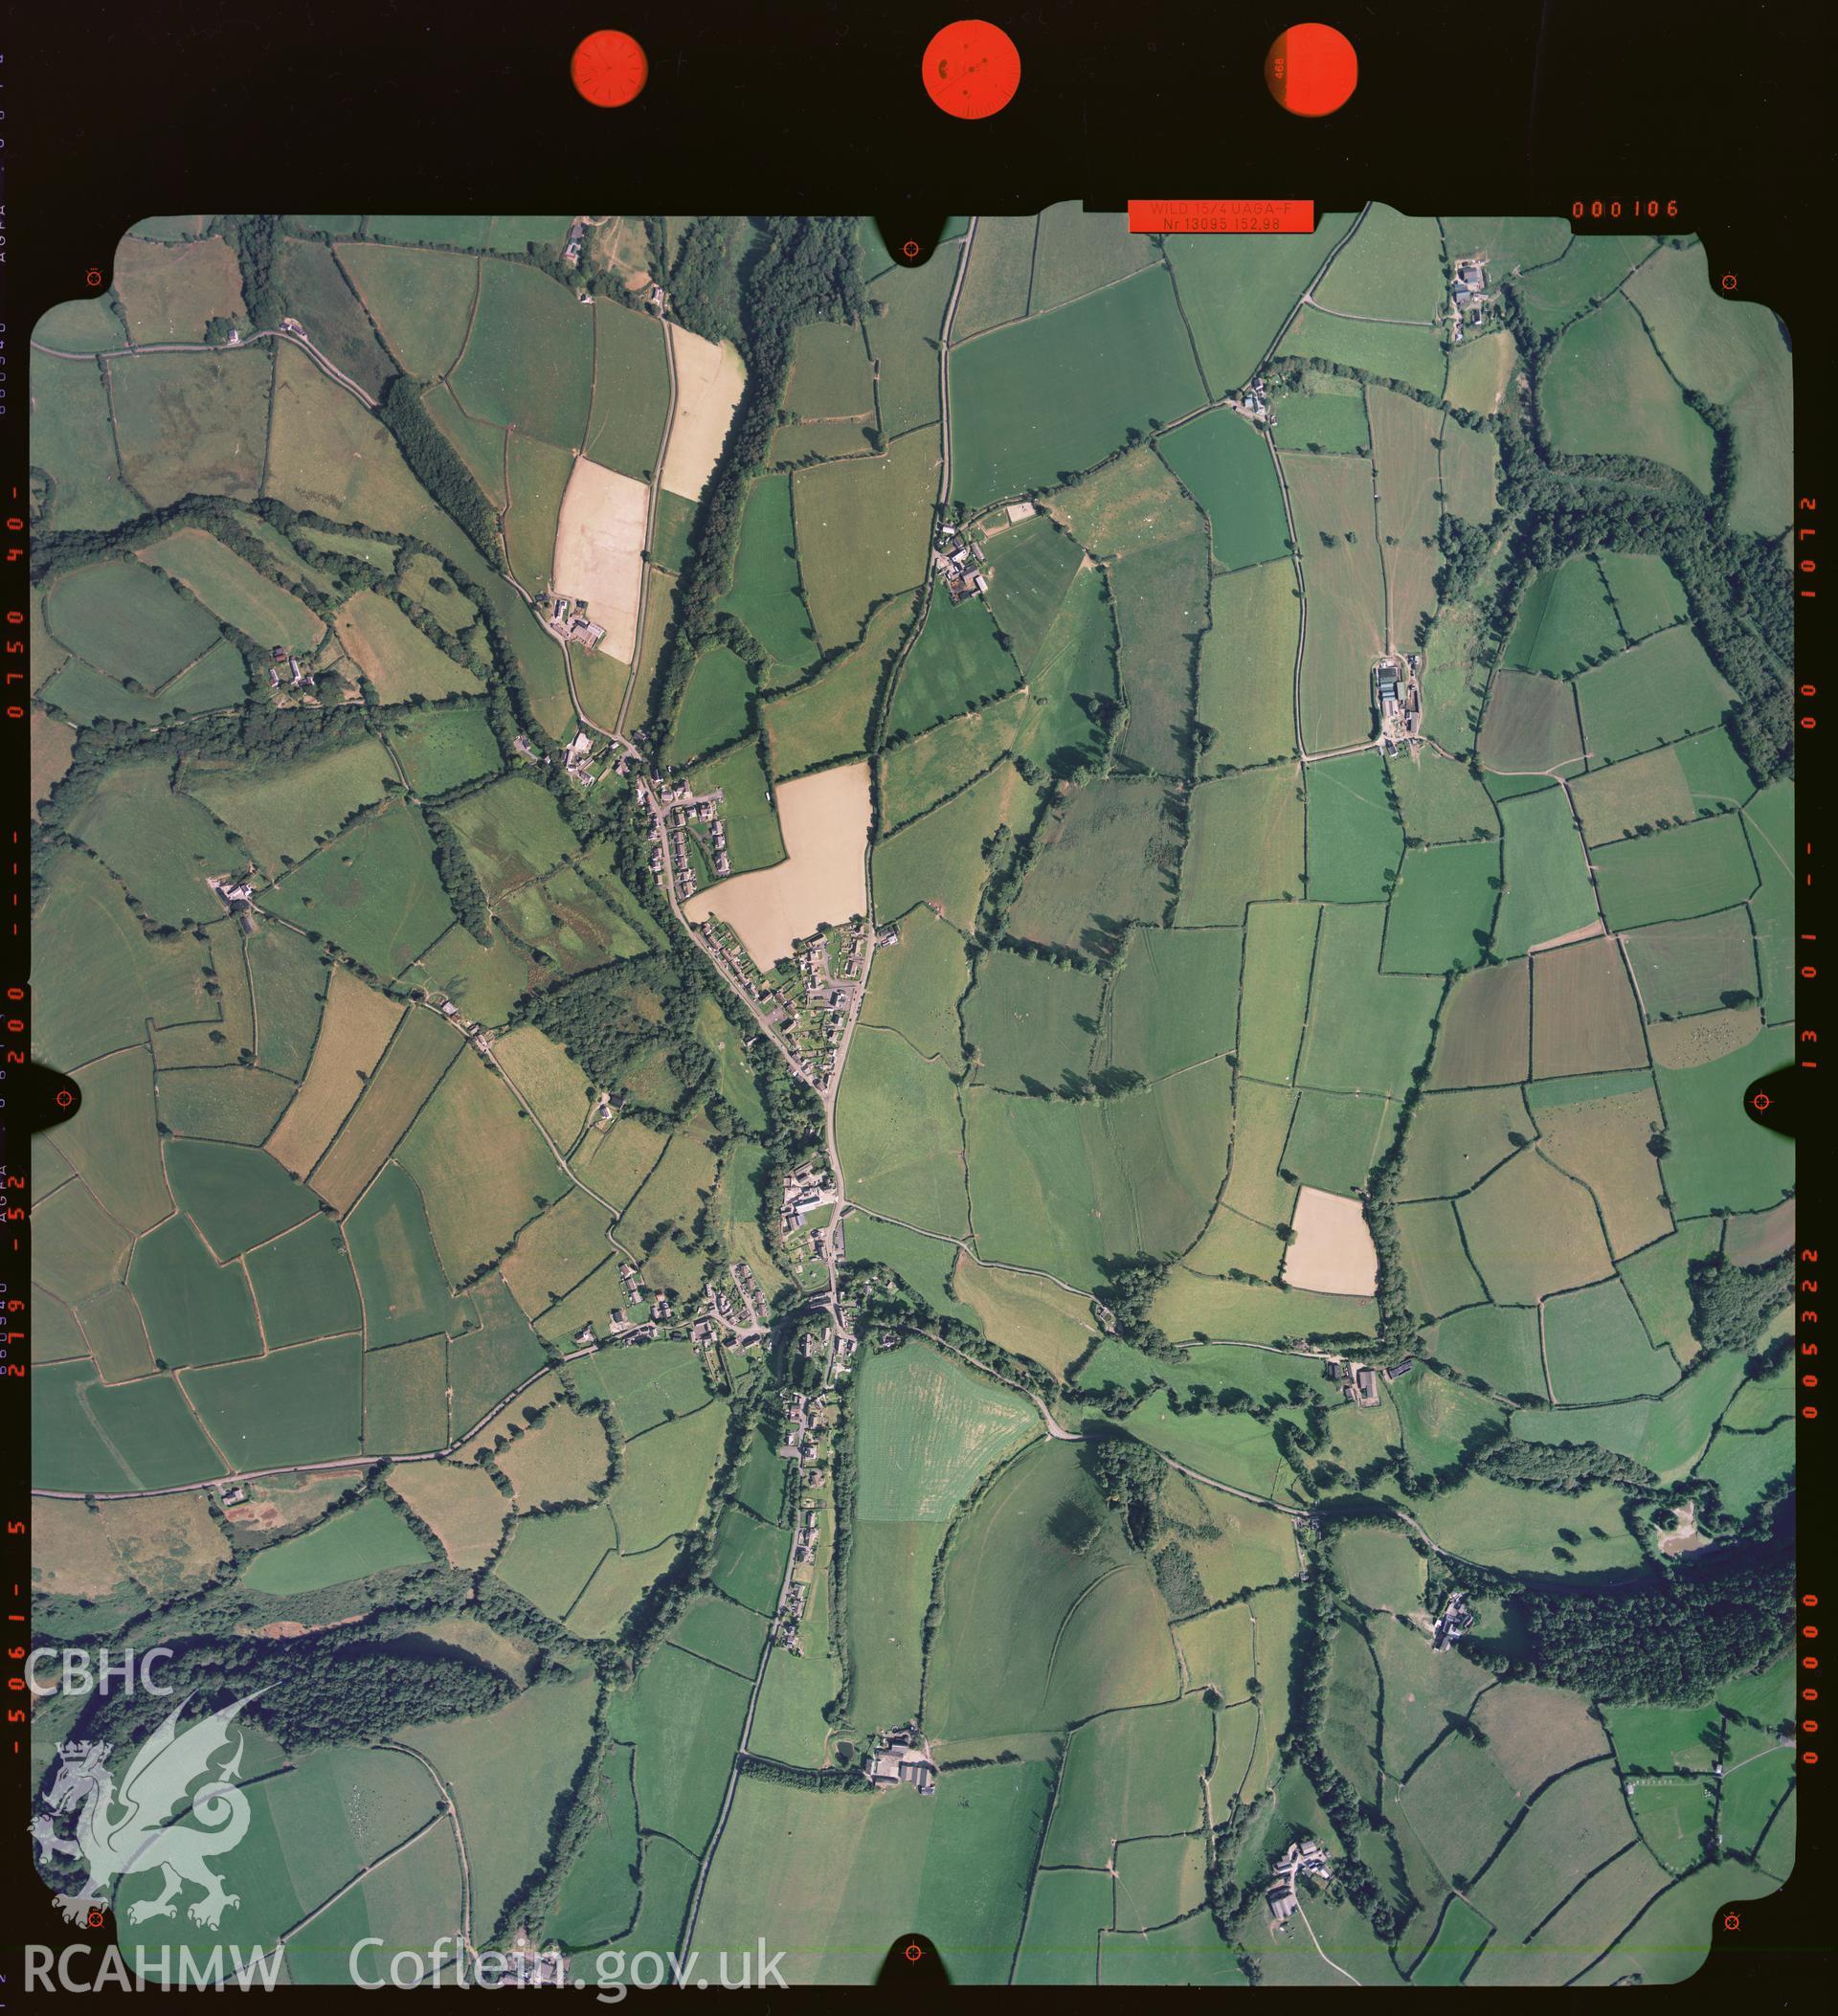 Digital copy of an Ordnance Survey aerial view of Meidrim dated 2003.